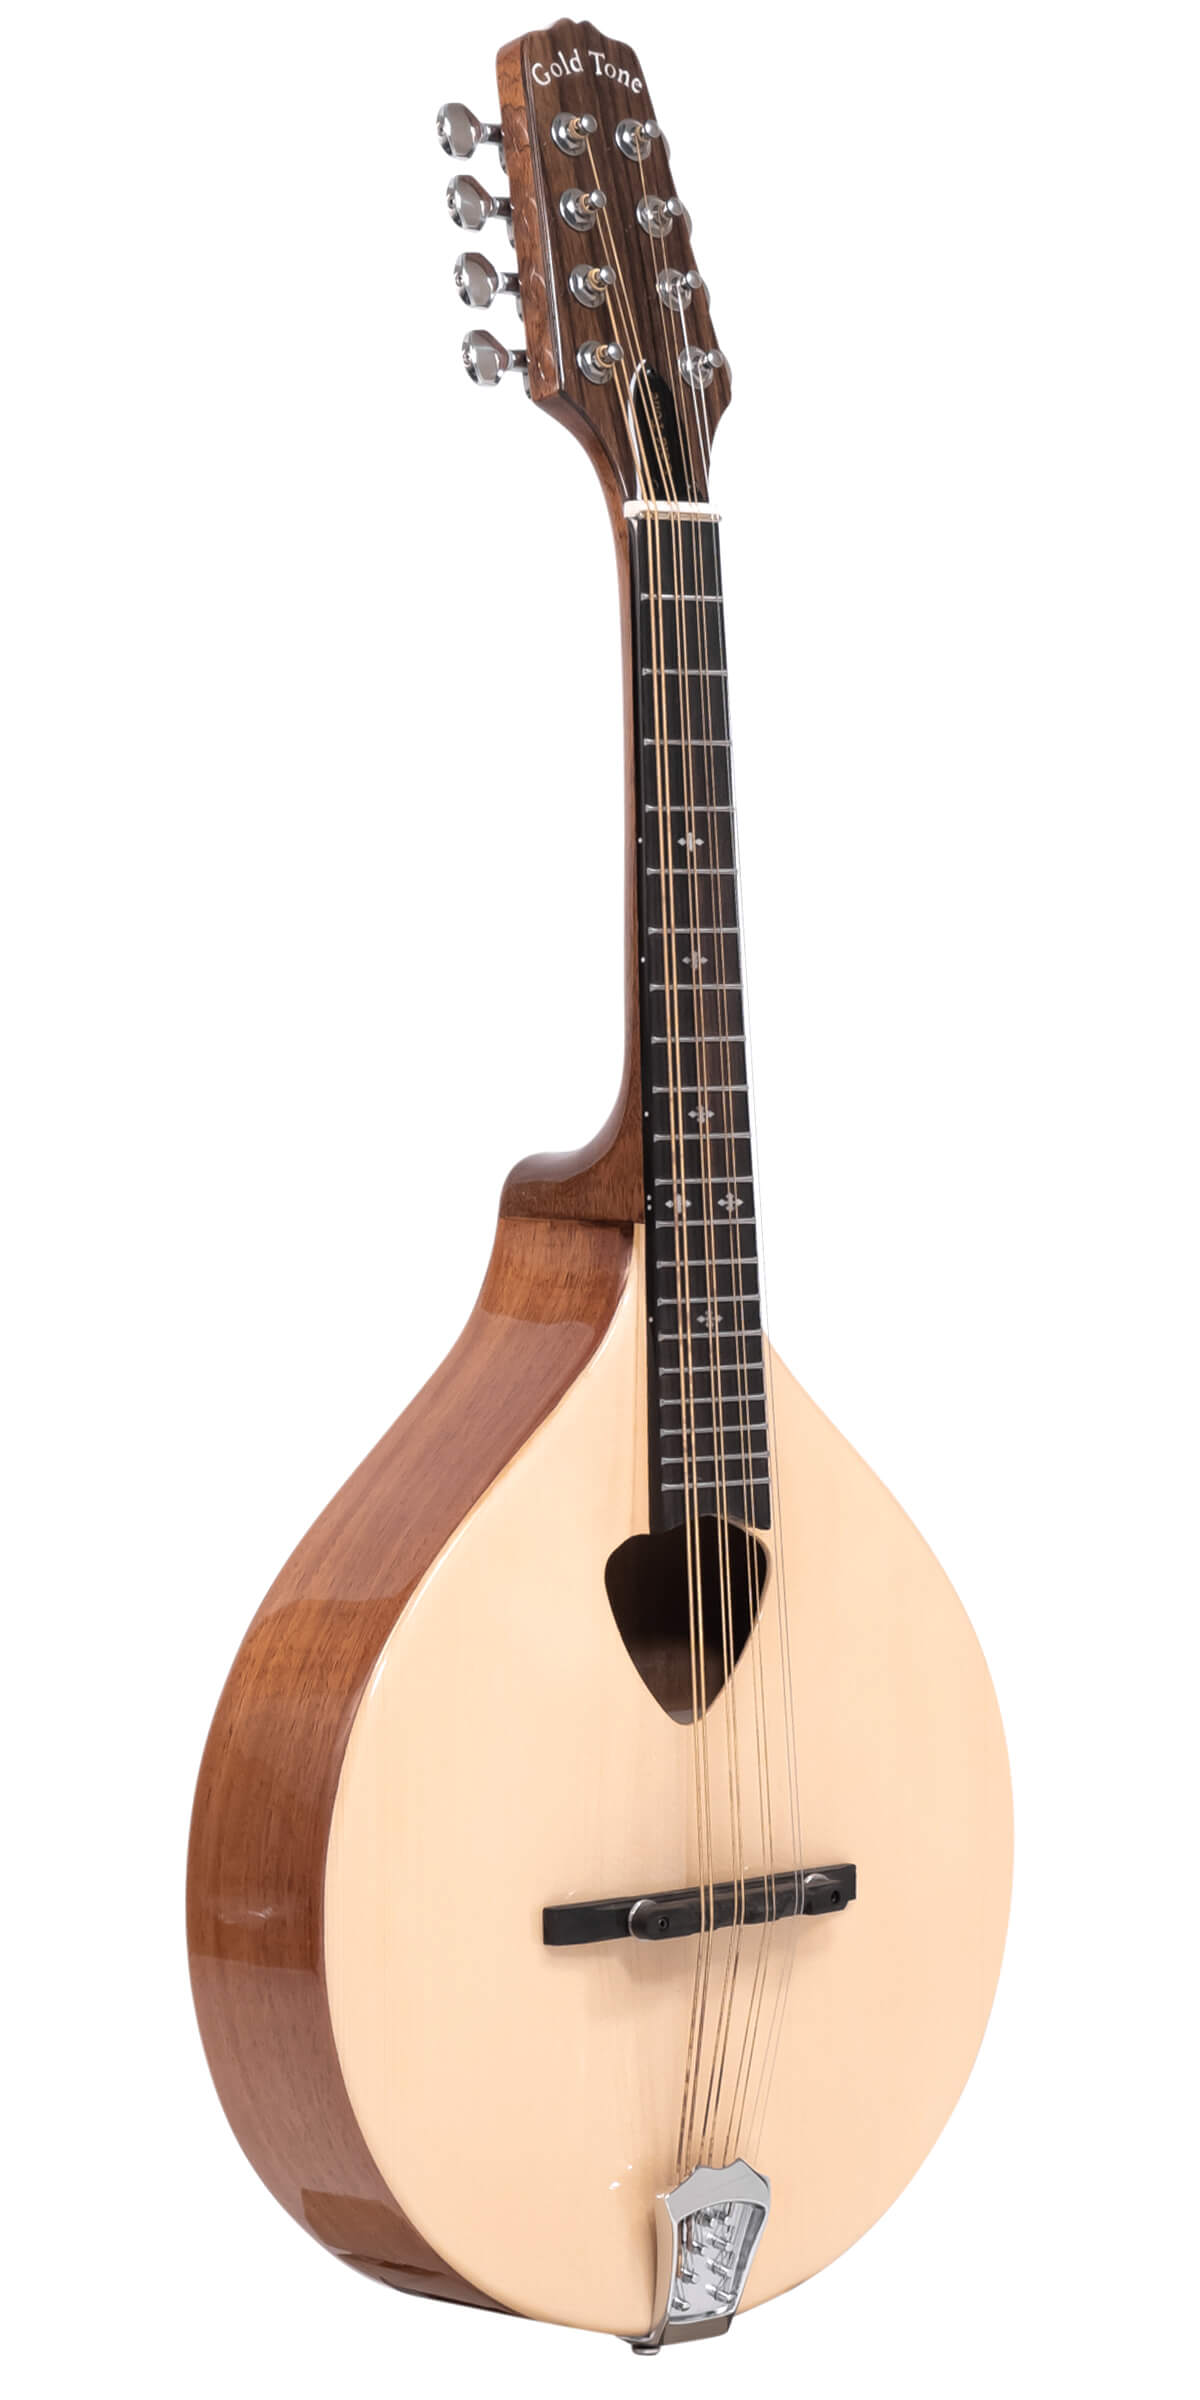 Irish Musical Instruments  Traditional Irish Music - Twinkl